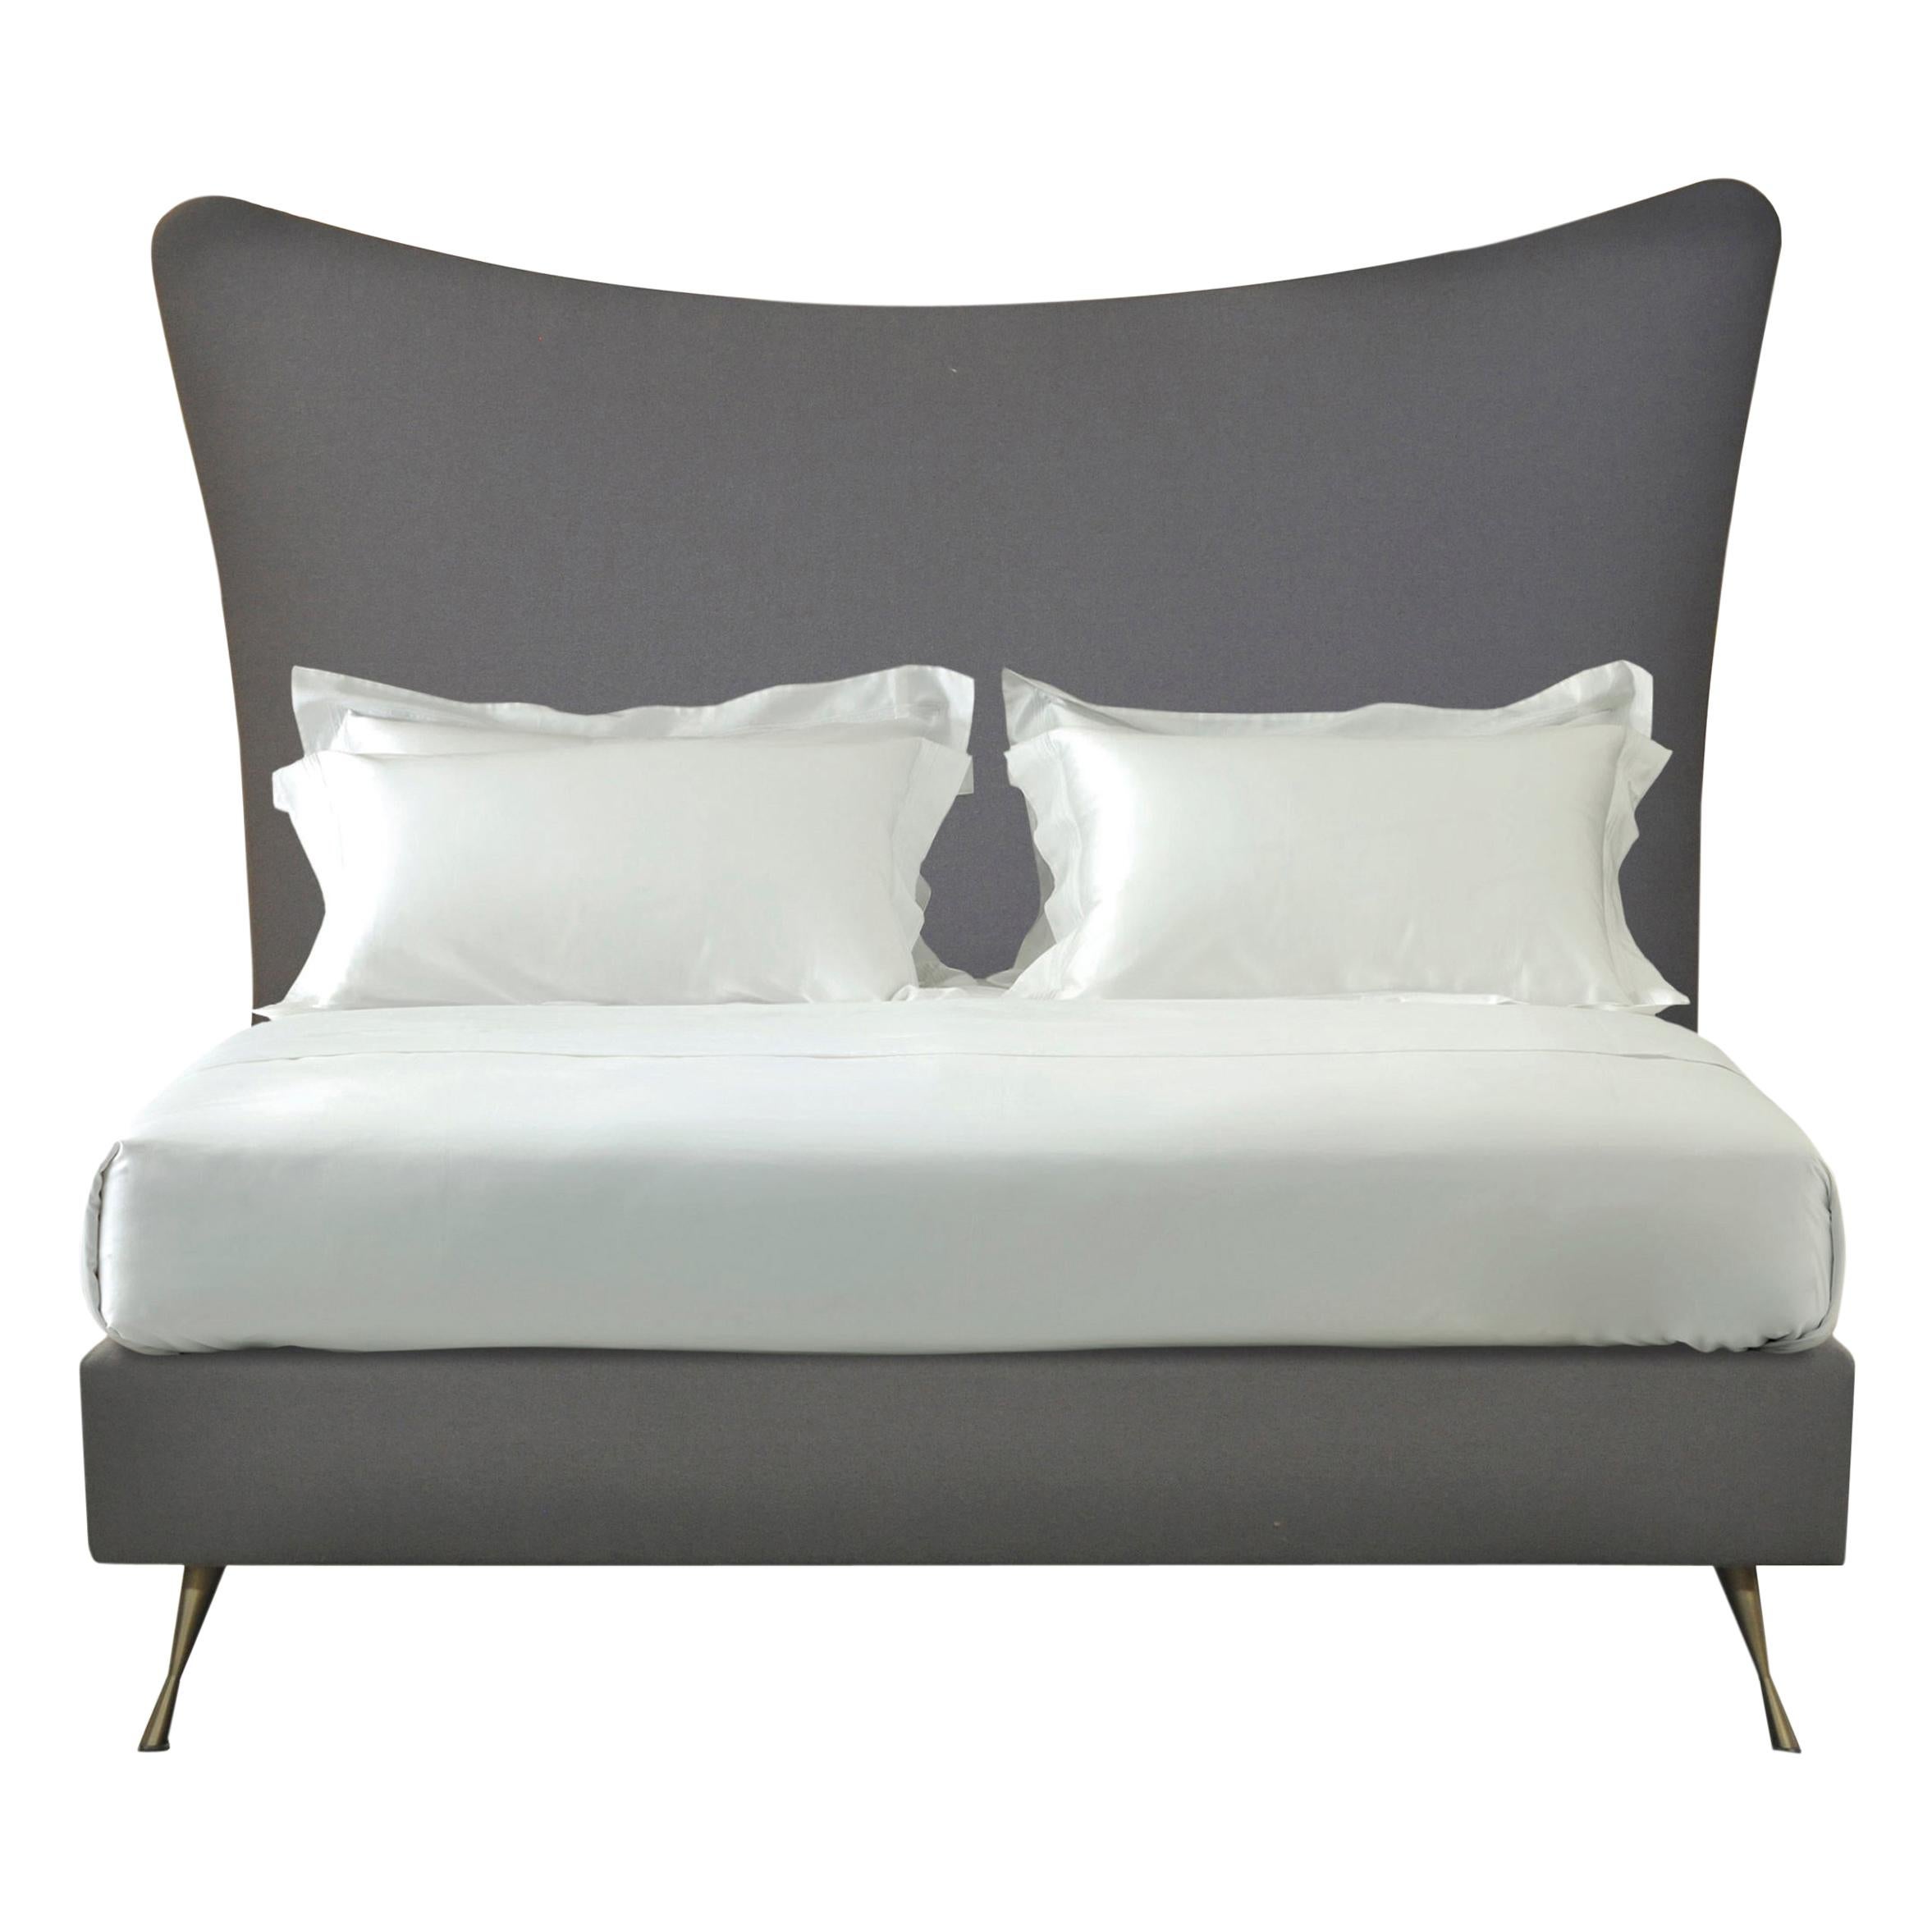 Savoir Amelia Headboard & Nº4 Bed Set, Made to Order, California King Size